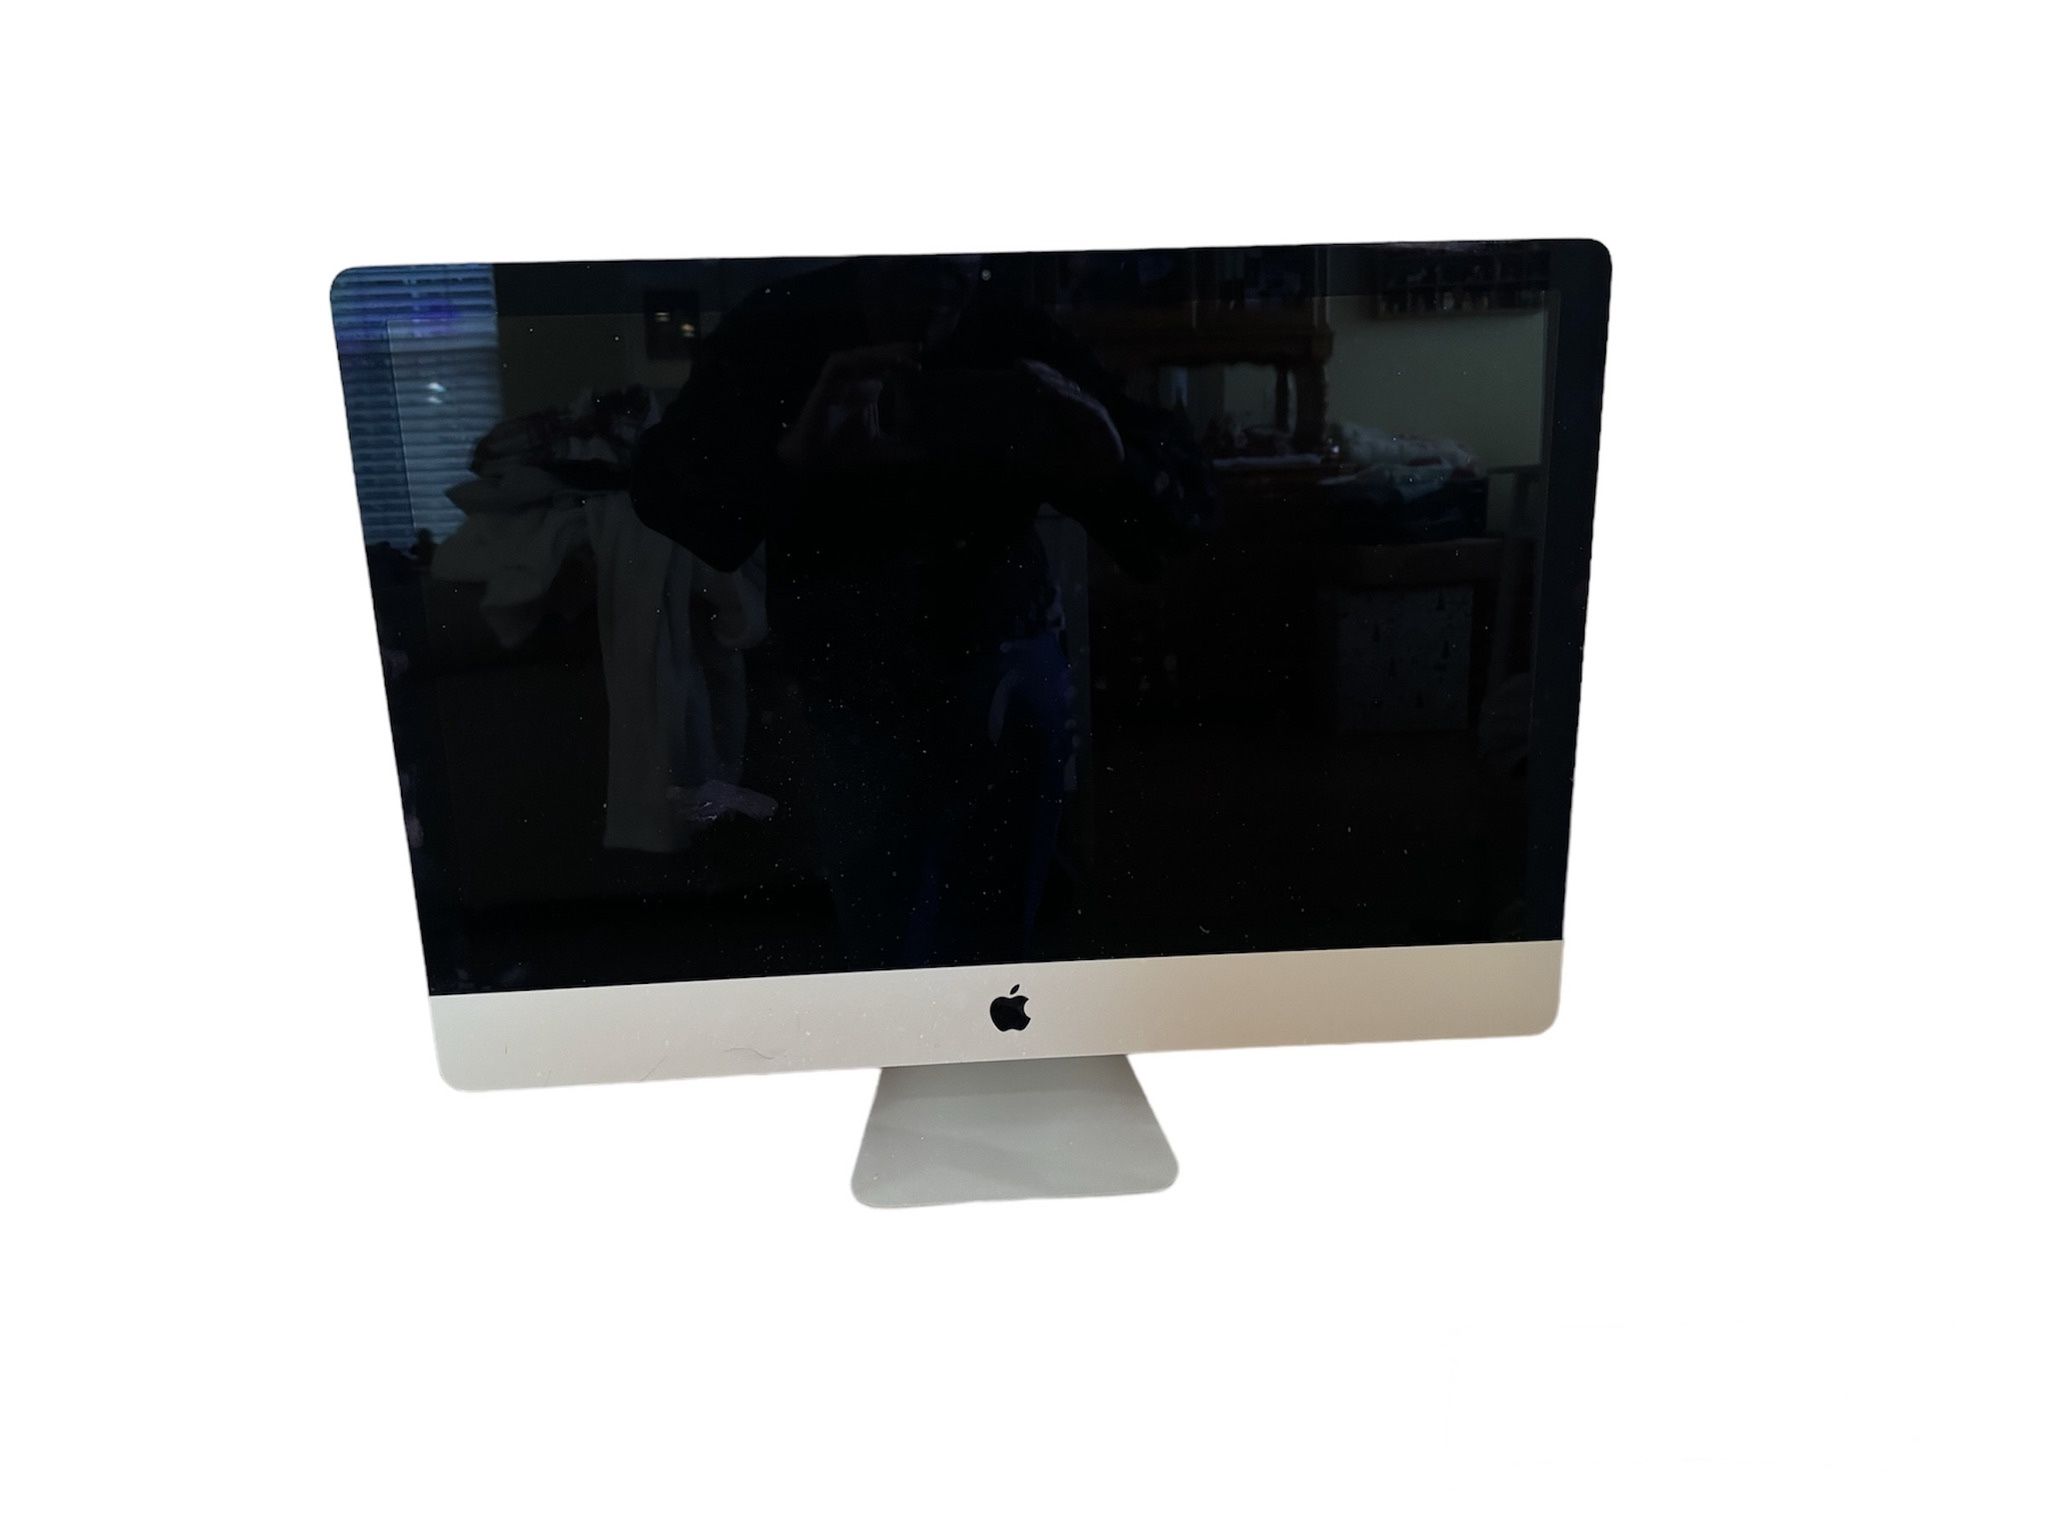 27-inch iMac with Retina 5K display "Core i5" MK482LL/A 